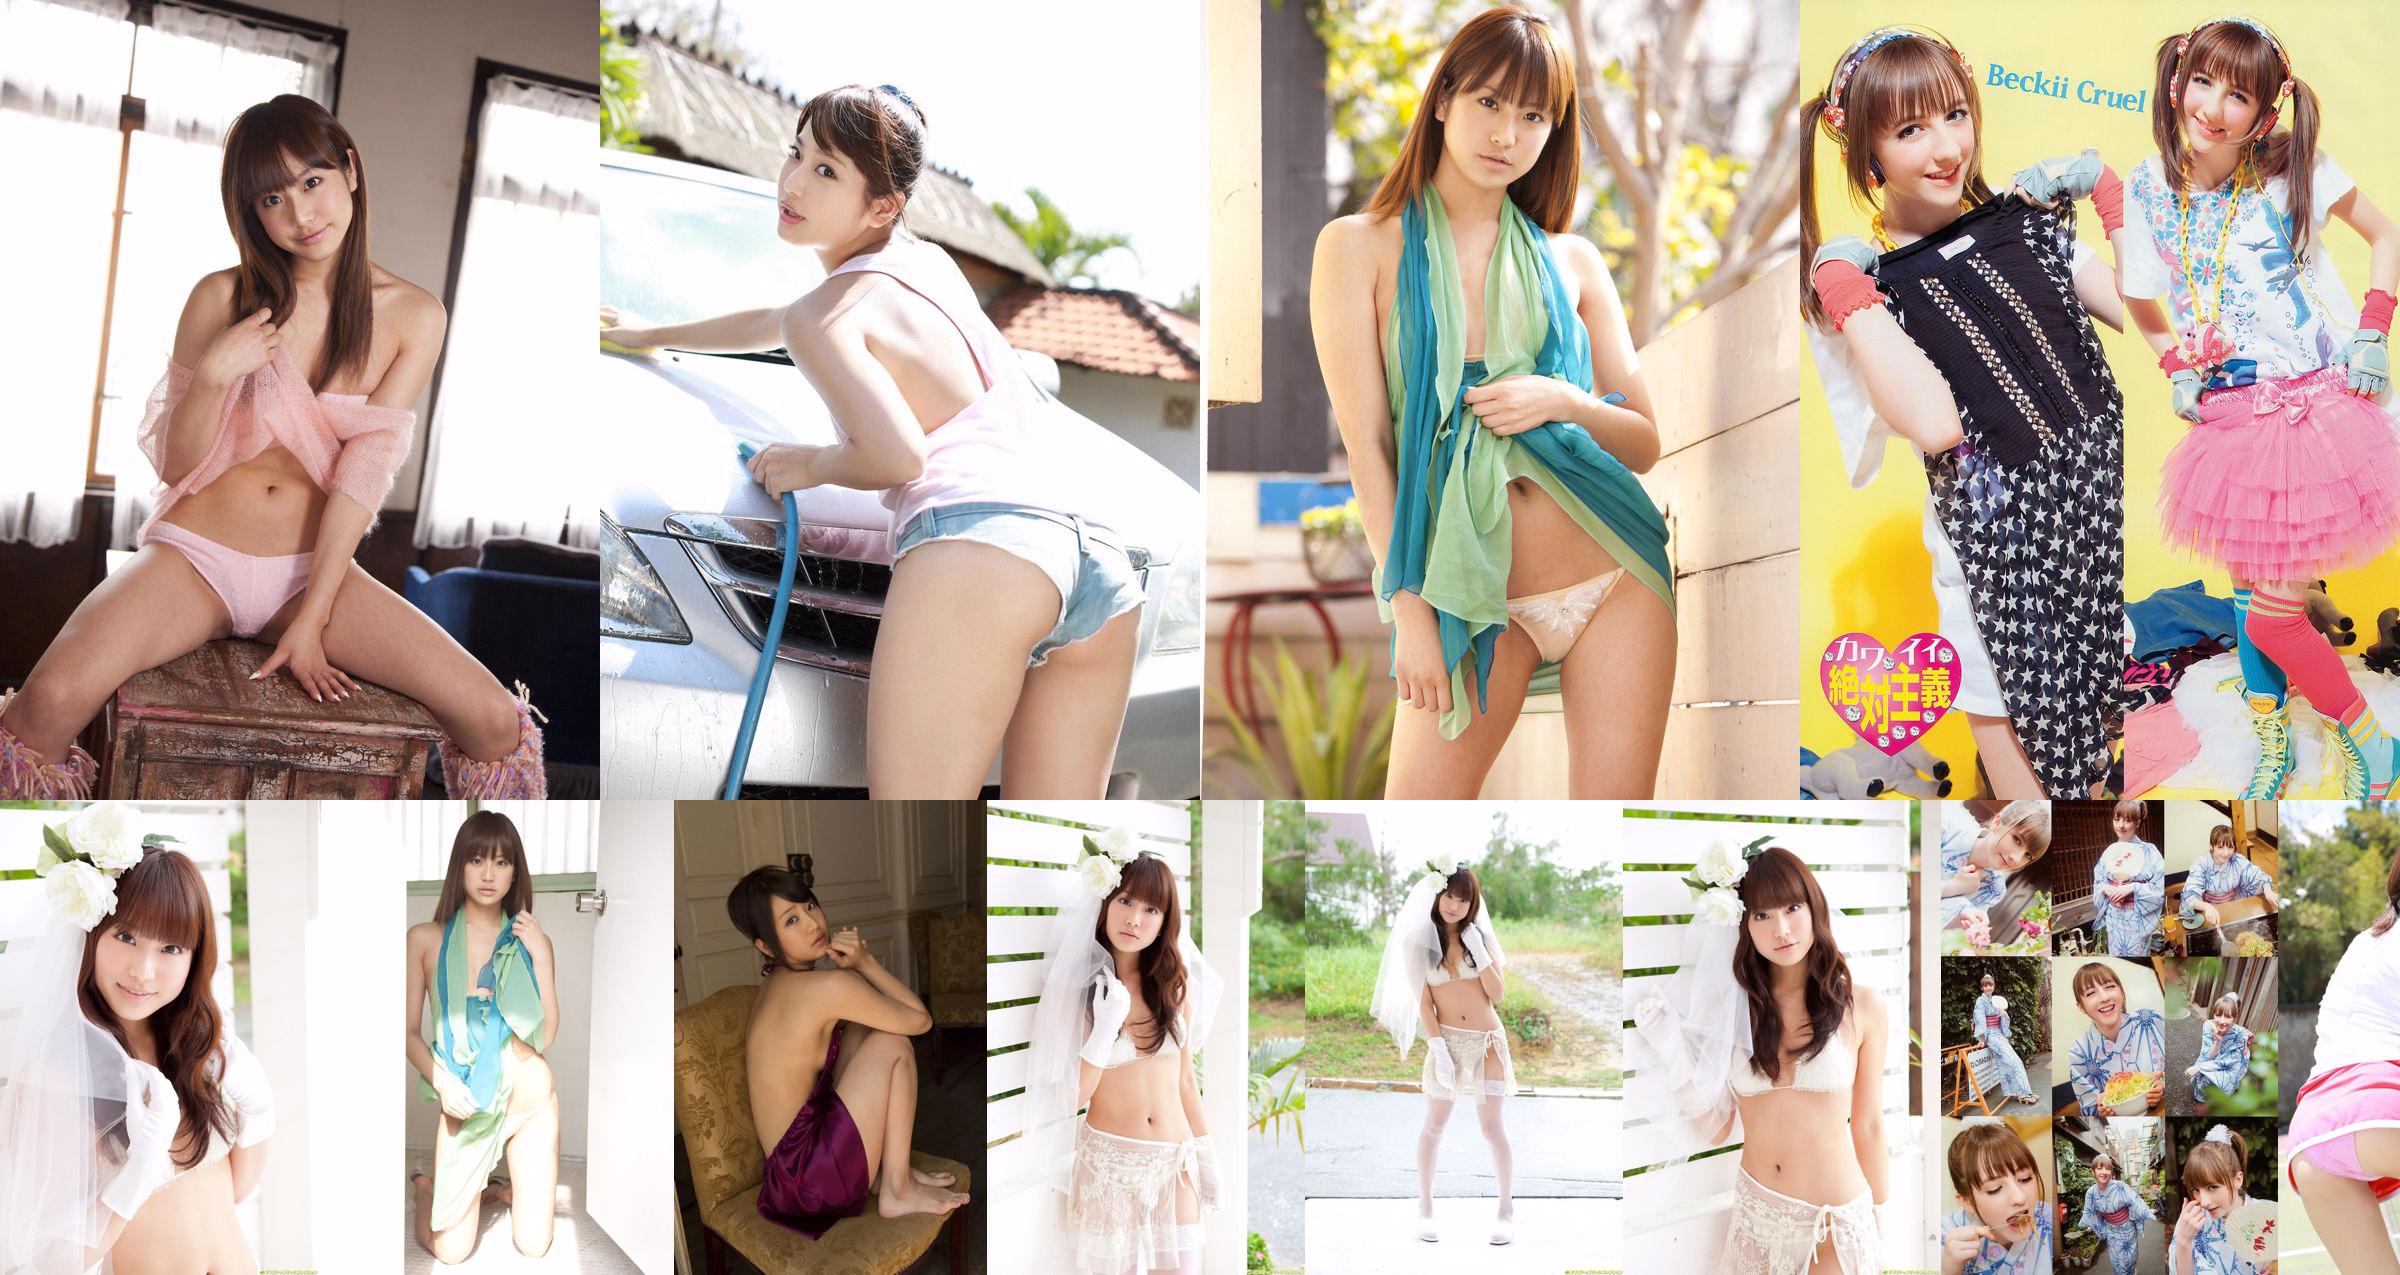 Asakura Mina / Asakura Mina "Charmina" [Sabra.net] Strictly Girls No.f7846b Page 1